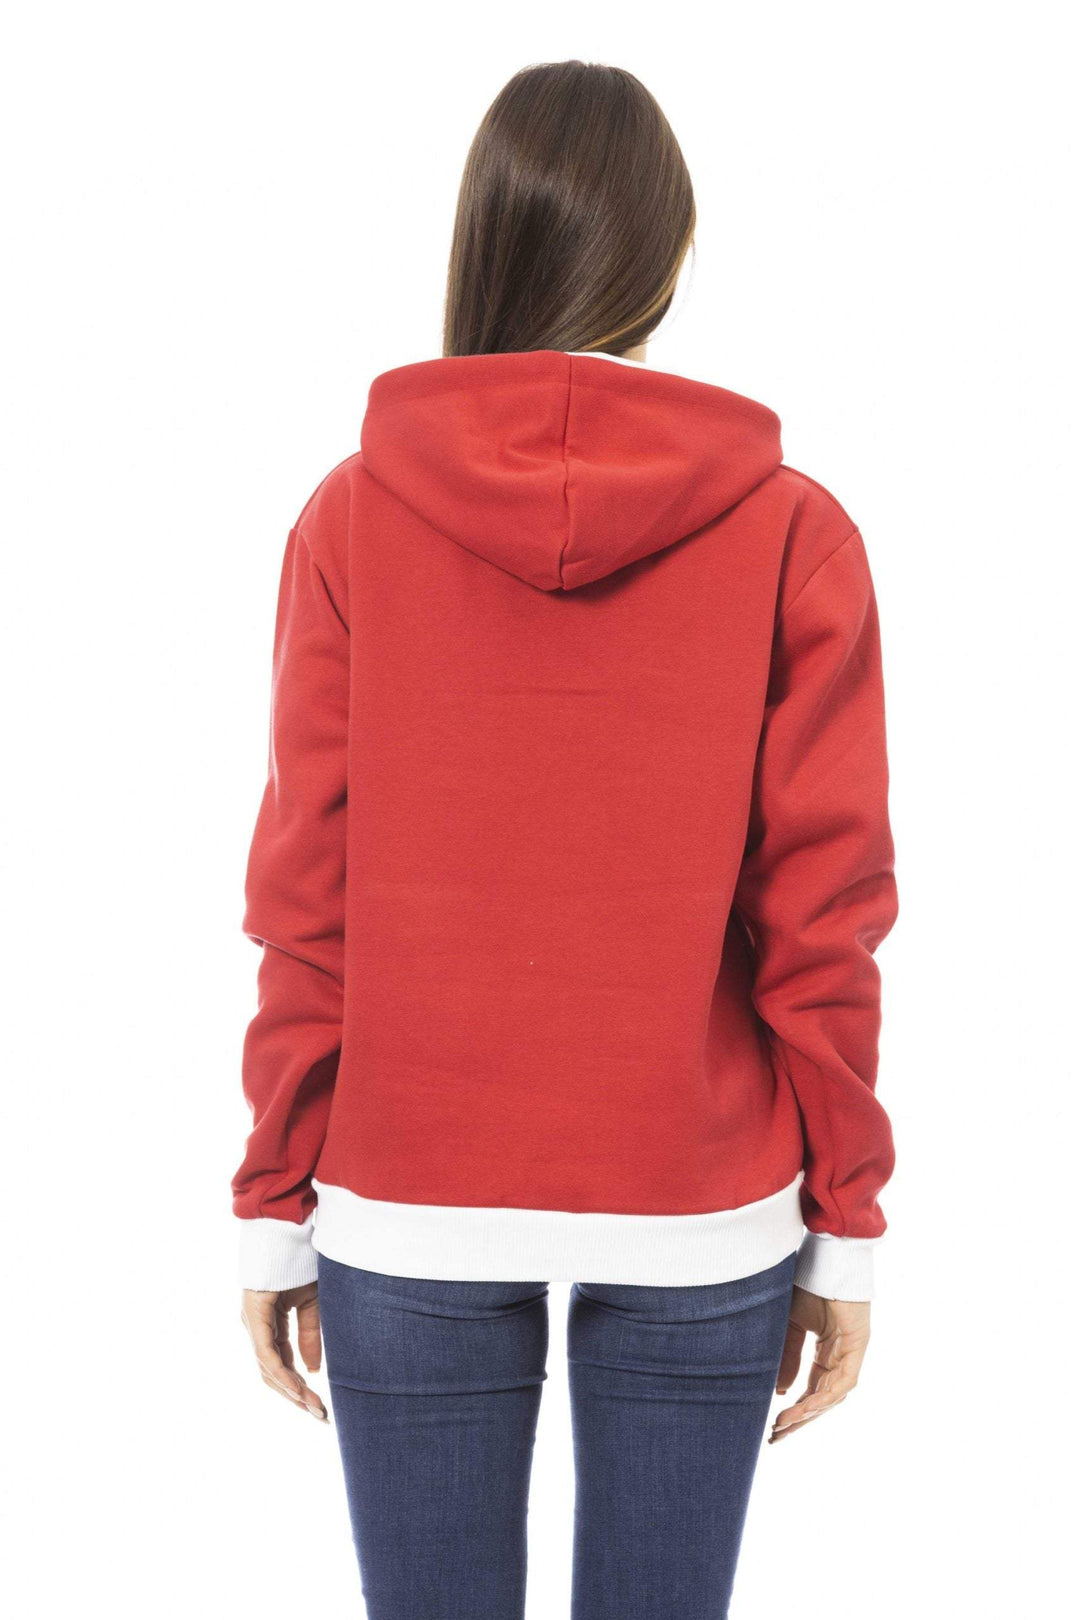 Baldinini Trend Red Cotton Sweater Baldinini Trend, feed-1, L, M, Red, S, Sweaters - Women - Clothing, XL, XS at SEYMAYKA